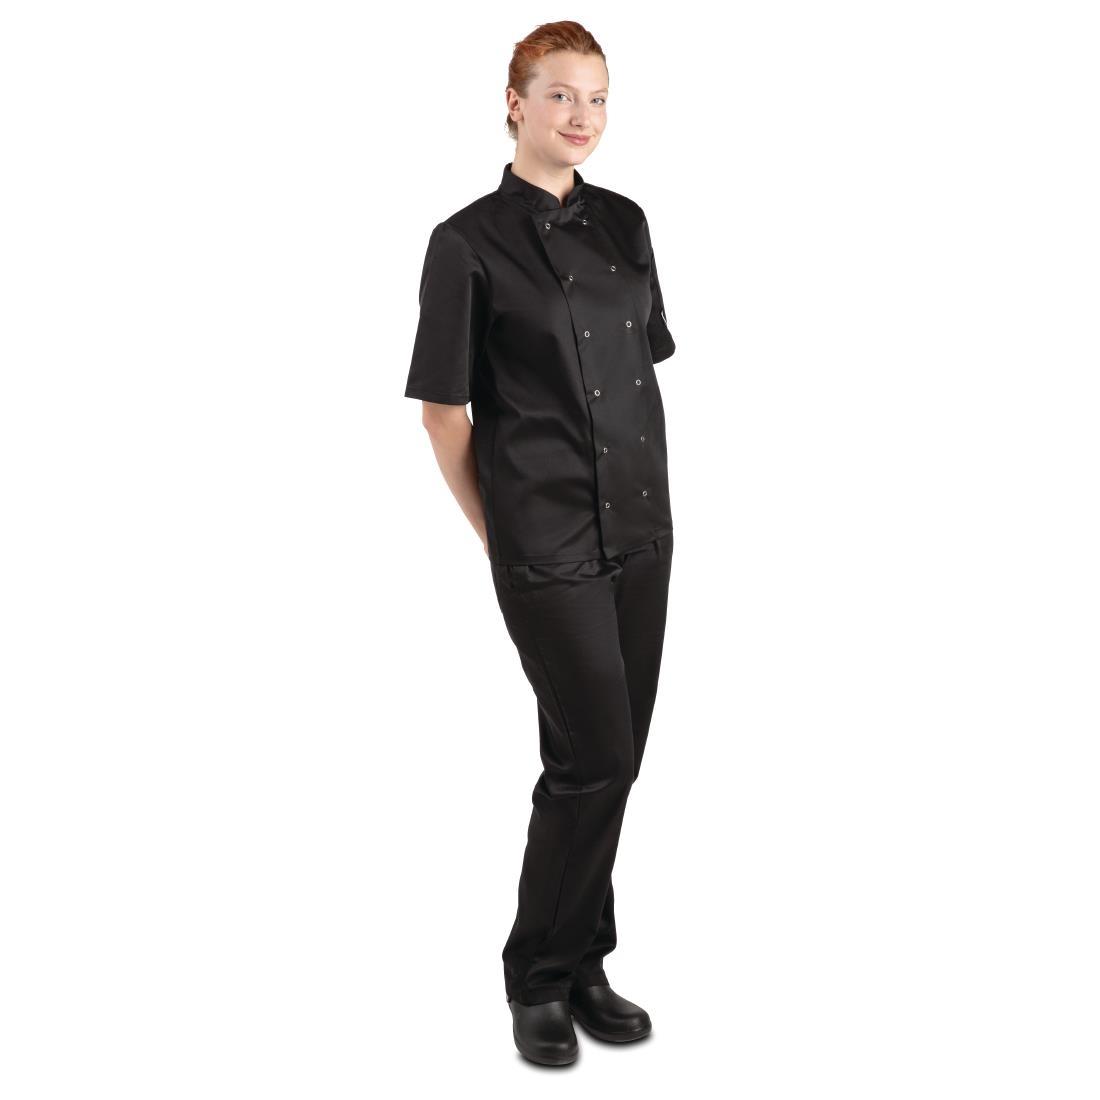 Whites Vegas Unisex Chefs Jacket Short Sleeve Black S - A439-S  - 6